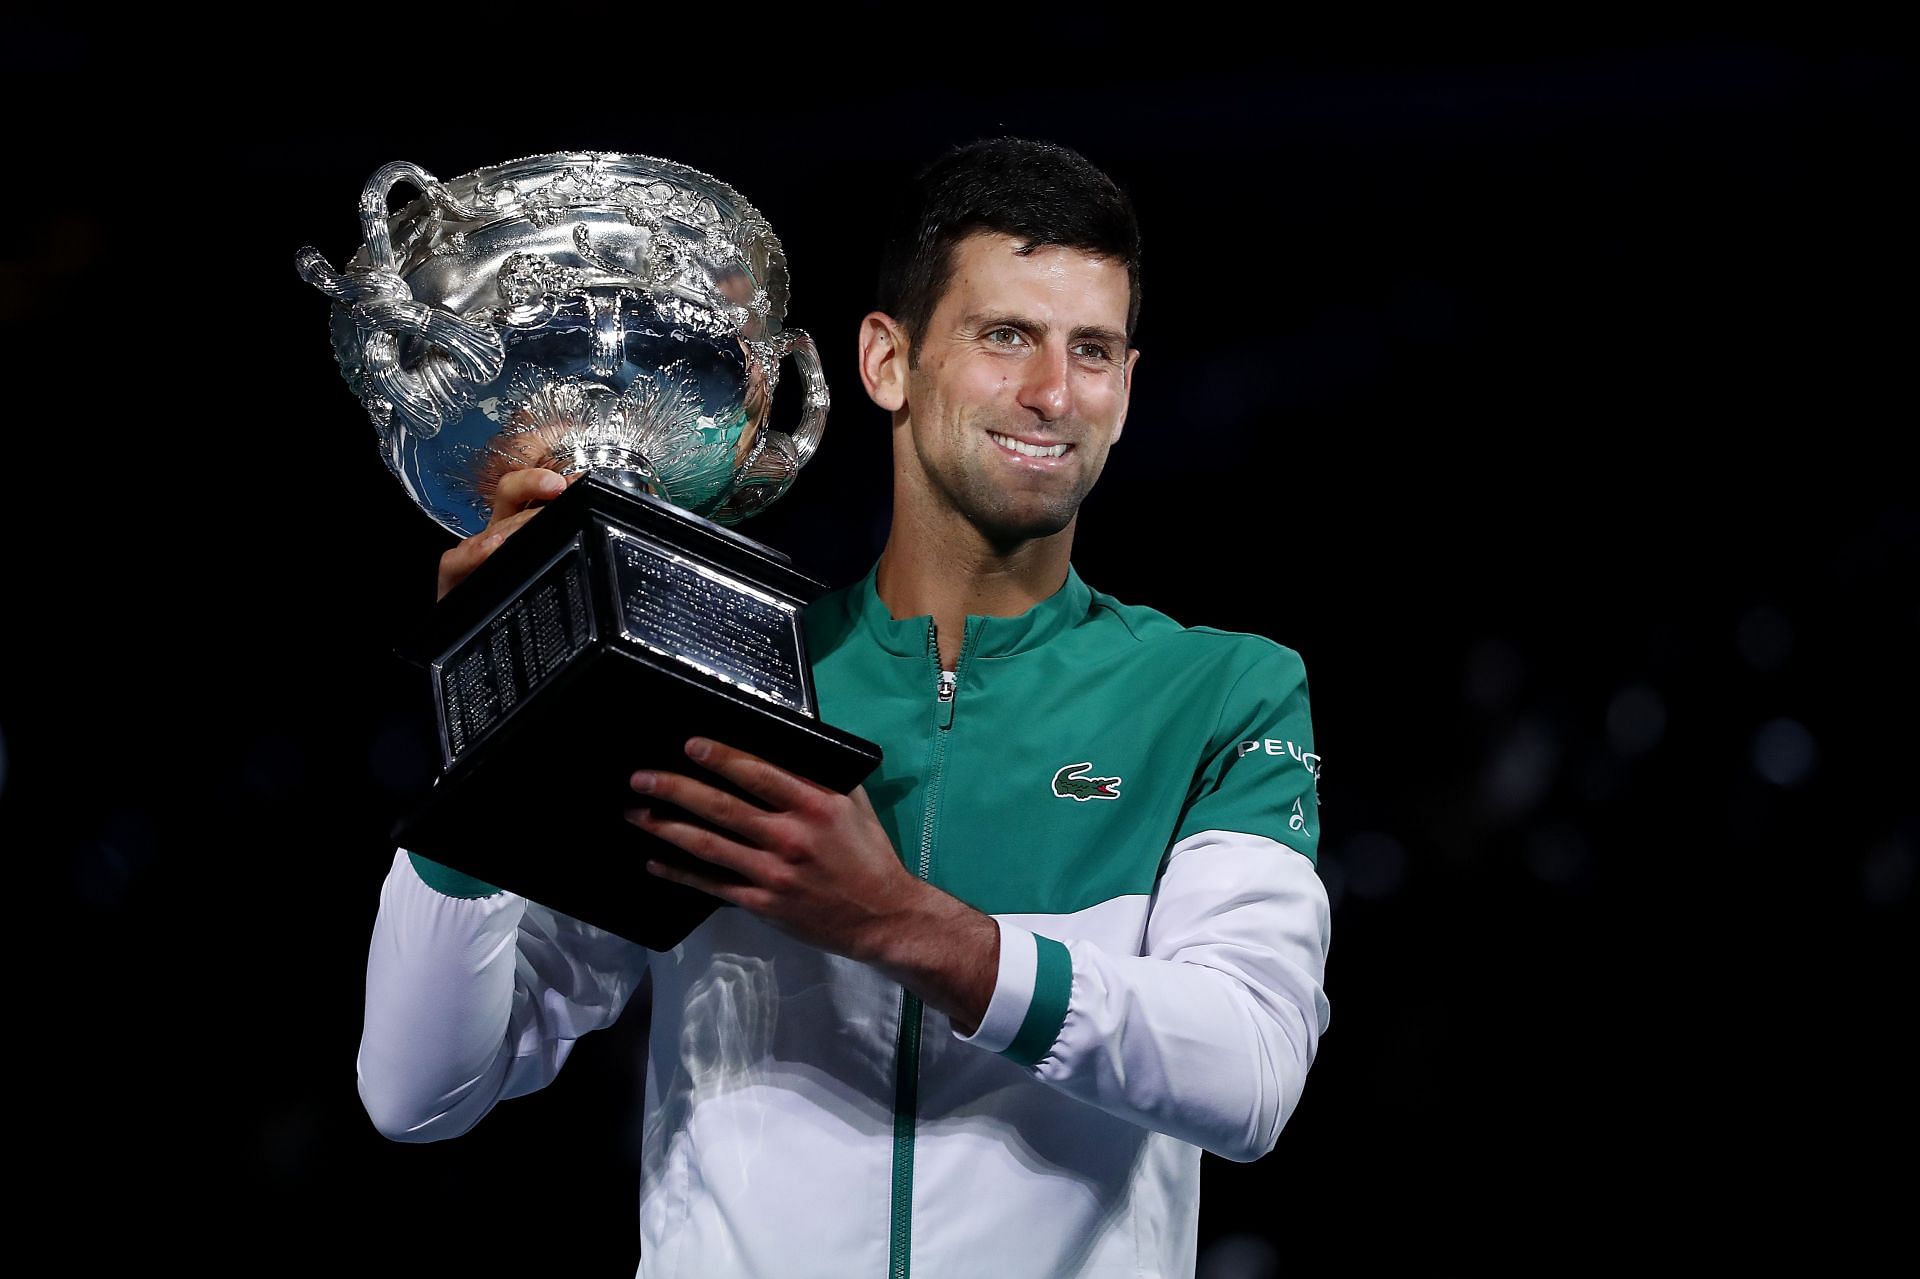 Novak Djokovic is the defending champion in this tournament.